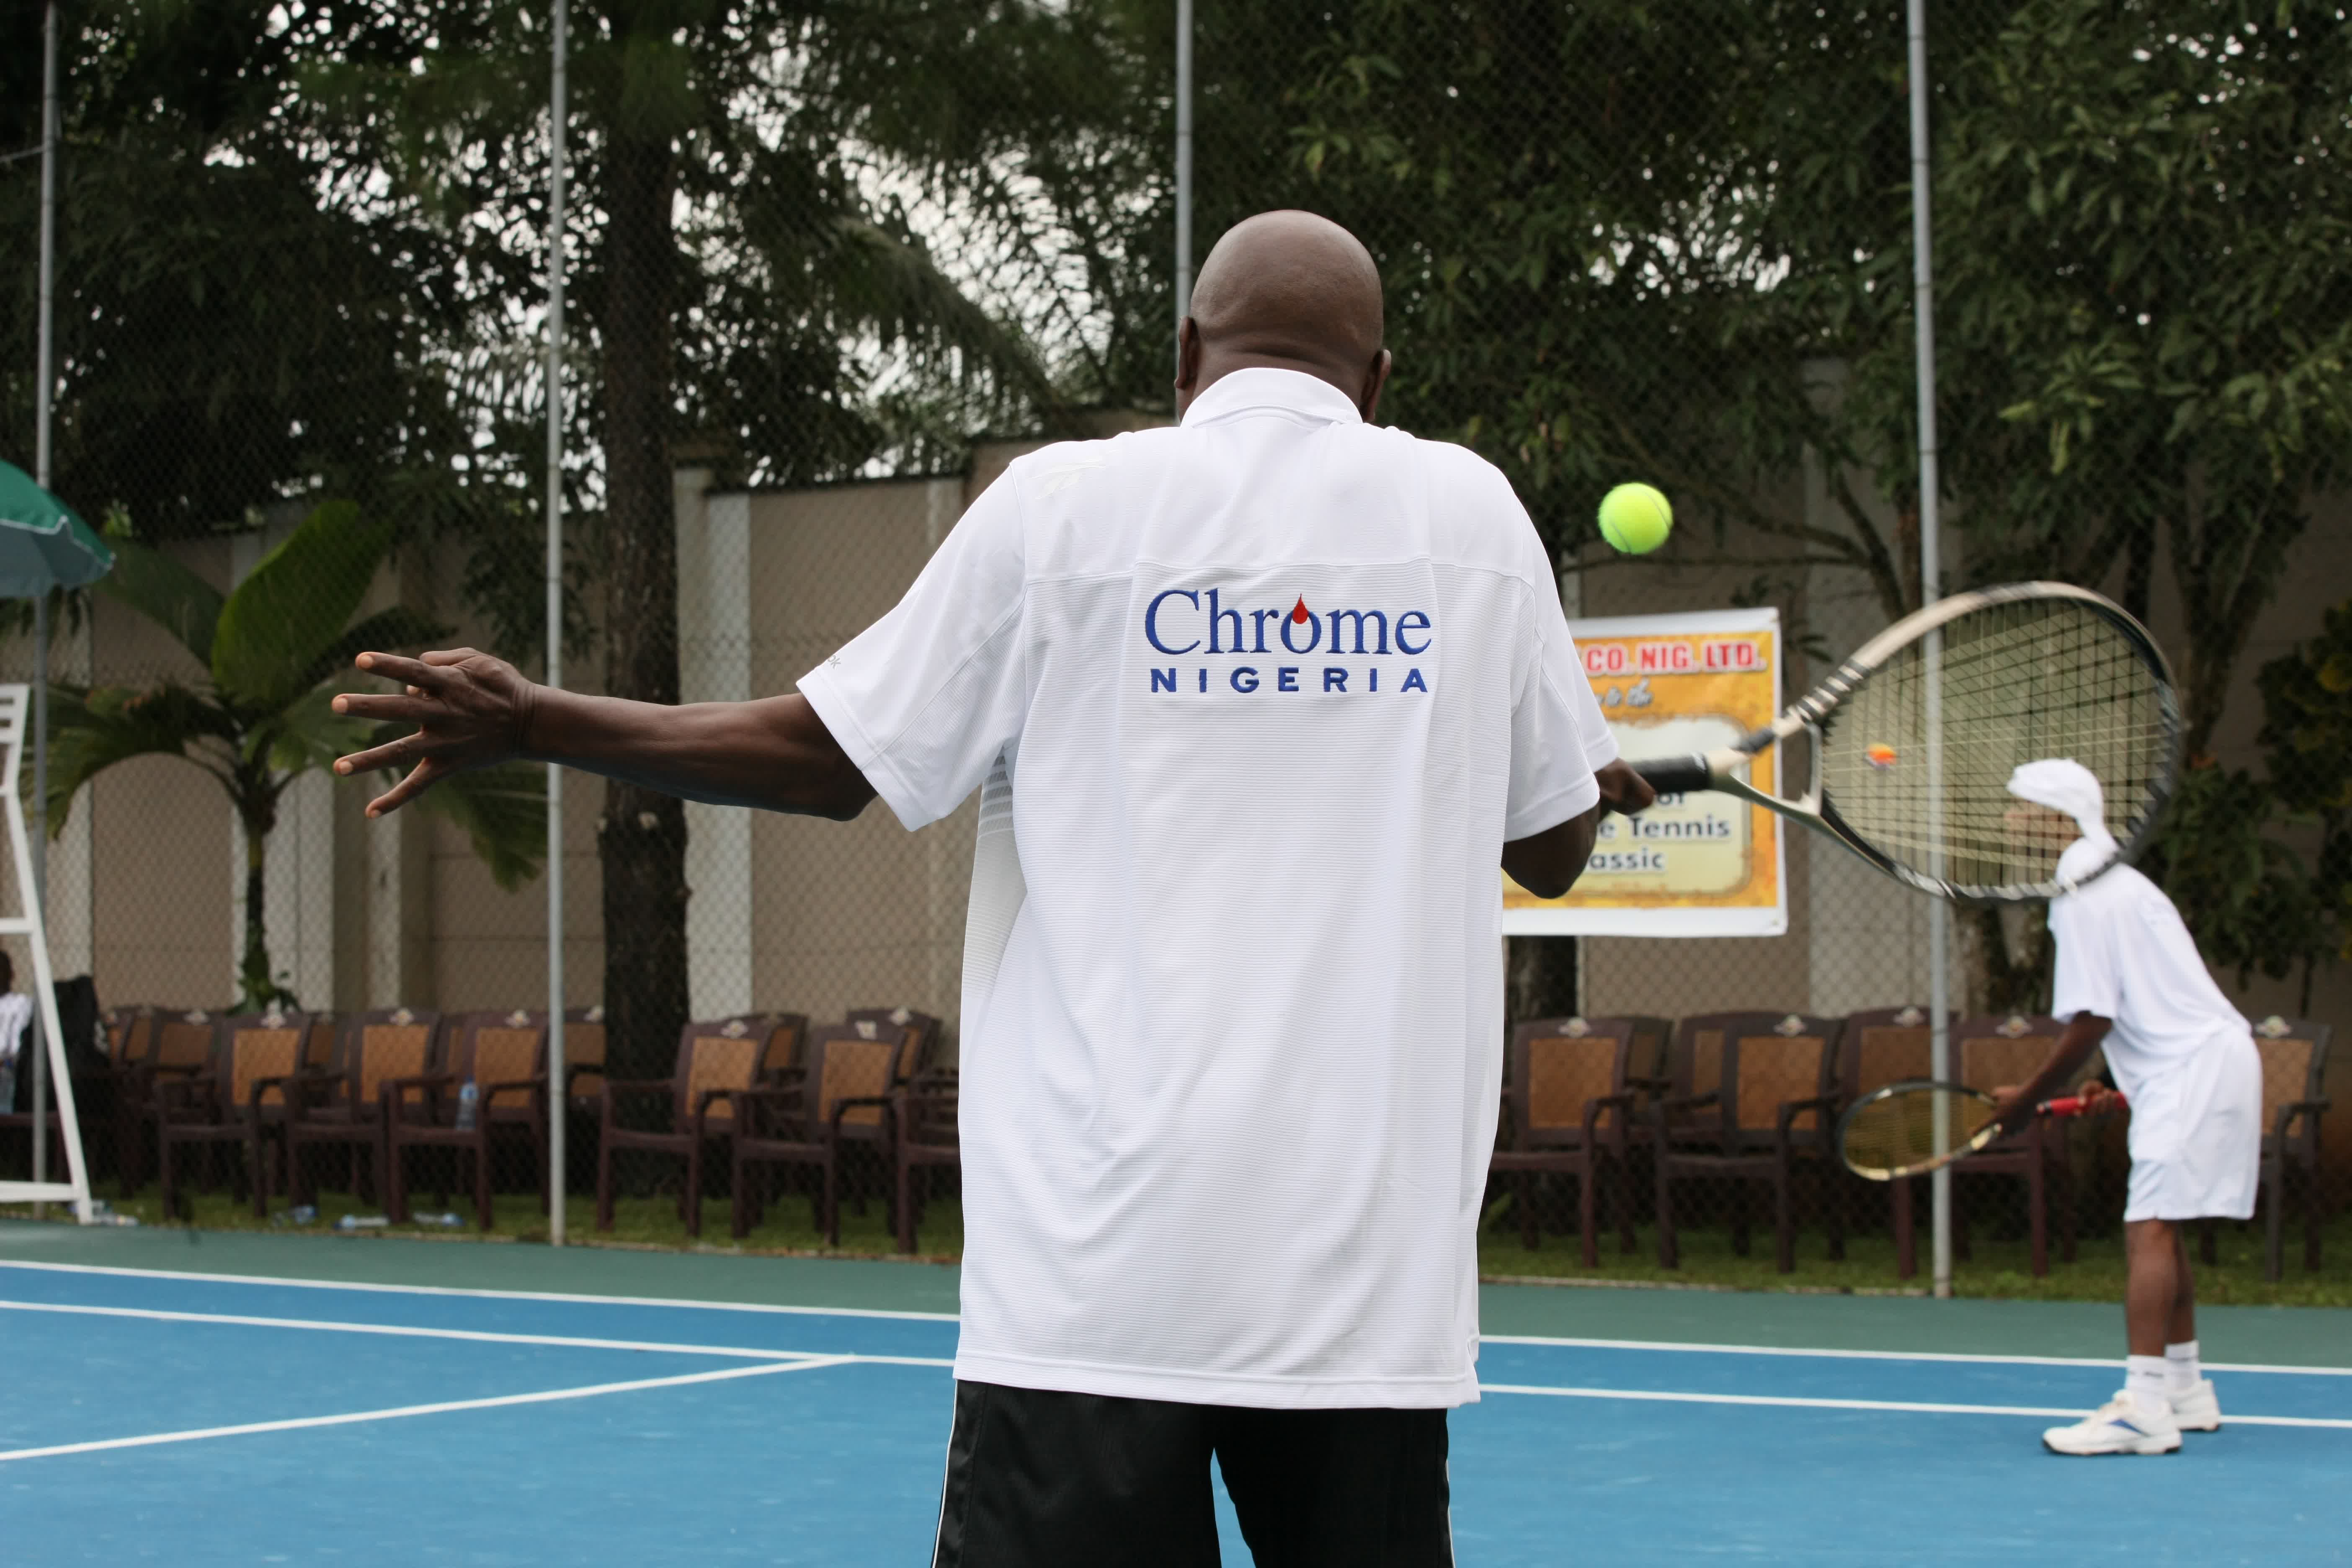 The 5th Chrome Tennis Classic 